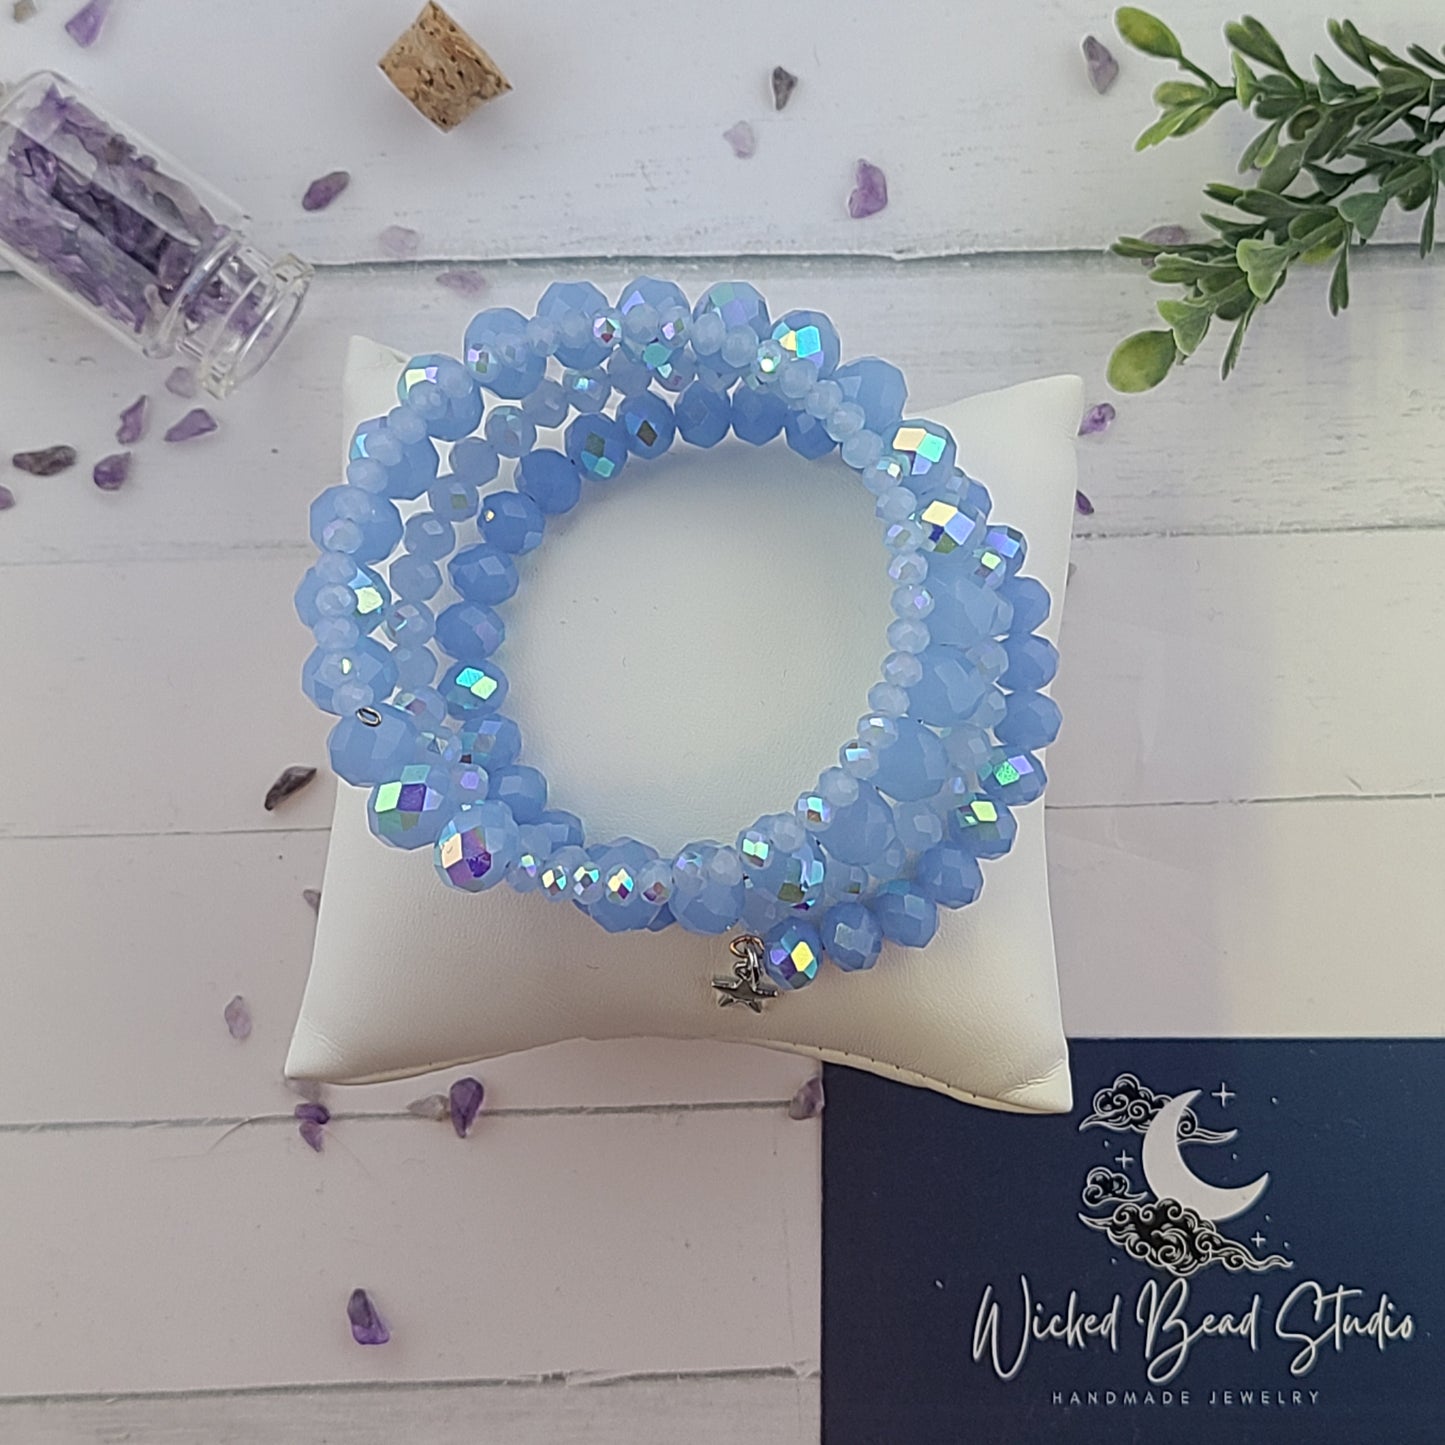 Handmade Glass Beaded Memory Wire Bracelet with Small Silver Star charm. "Aurora Borealis" Bracelet